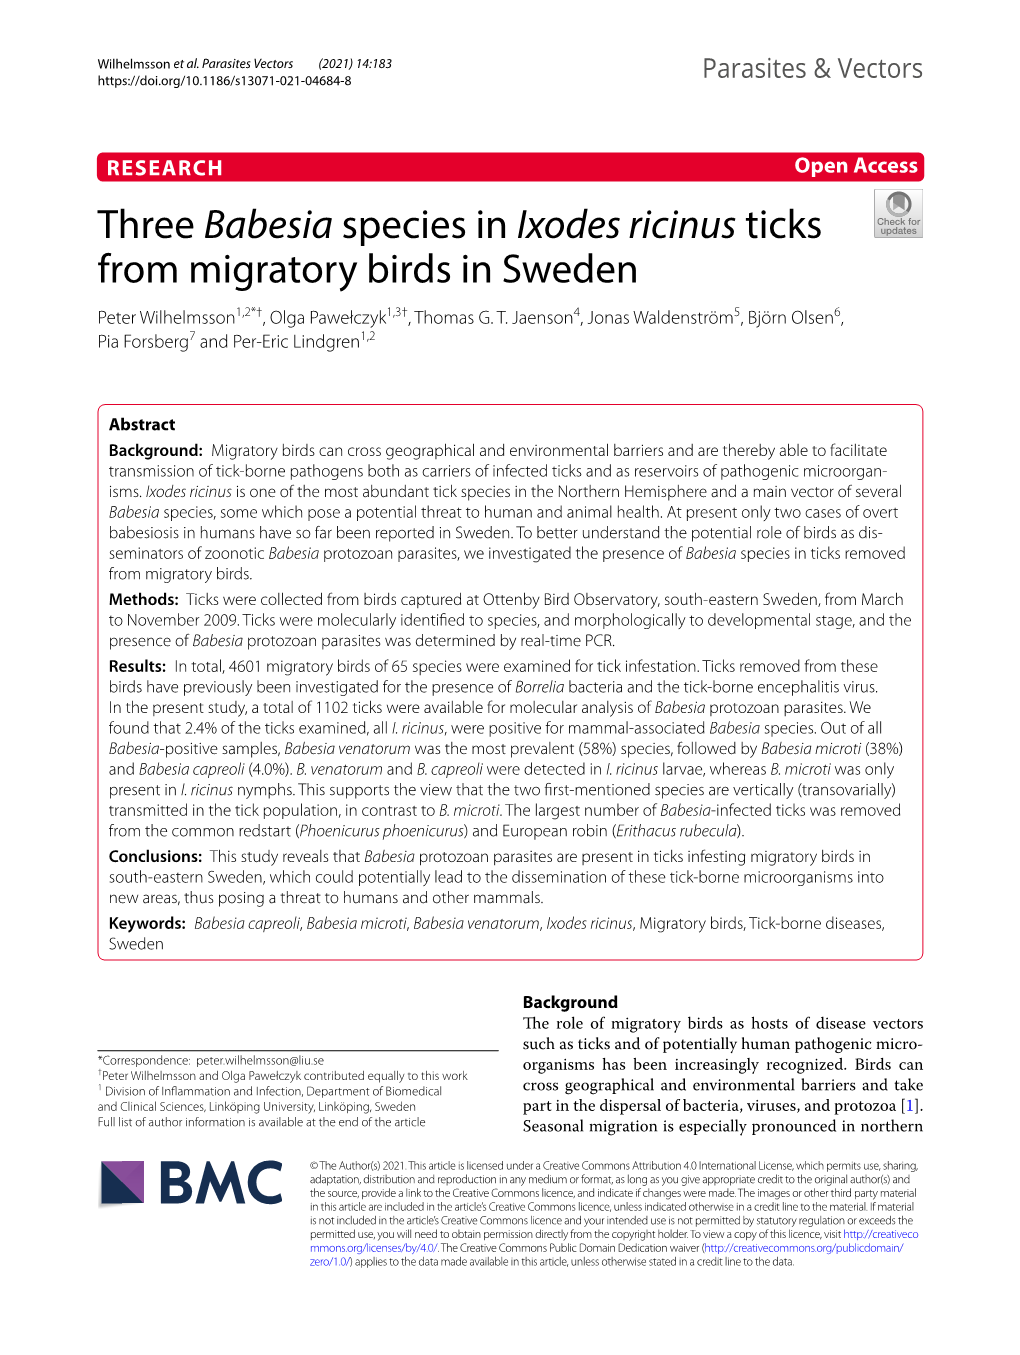 Three Babesia Species in Ixodes Ricinus Ticks from Migratory Birds in Sweden Peter Wilhelmsson1,2*†, Olga Pawełczyk1,3†, Thomas G